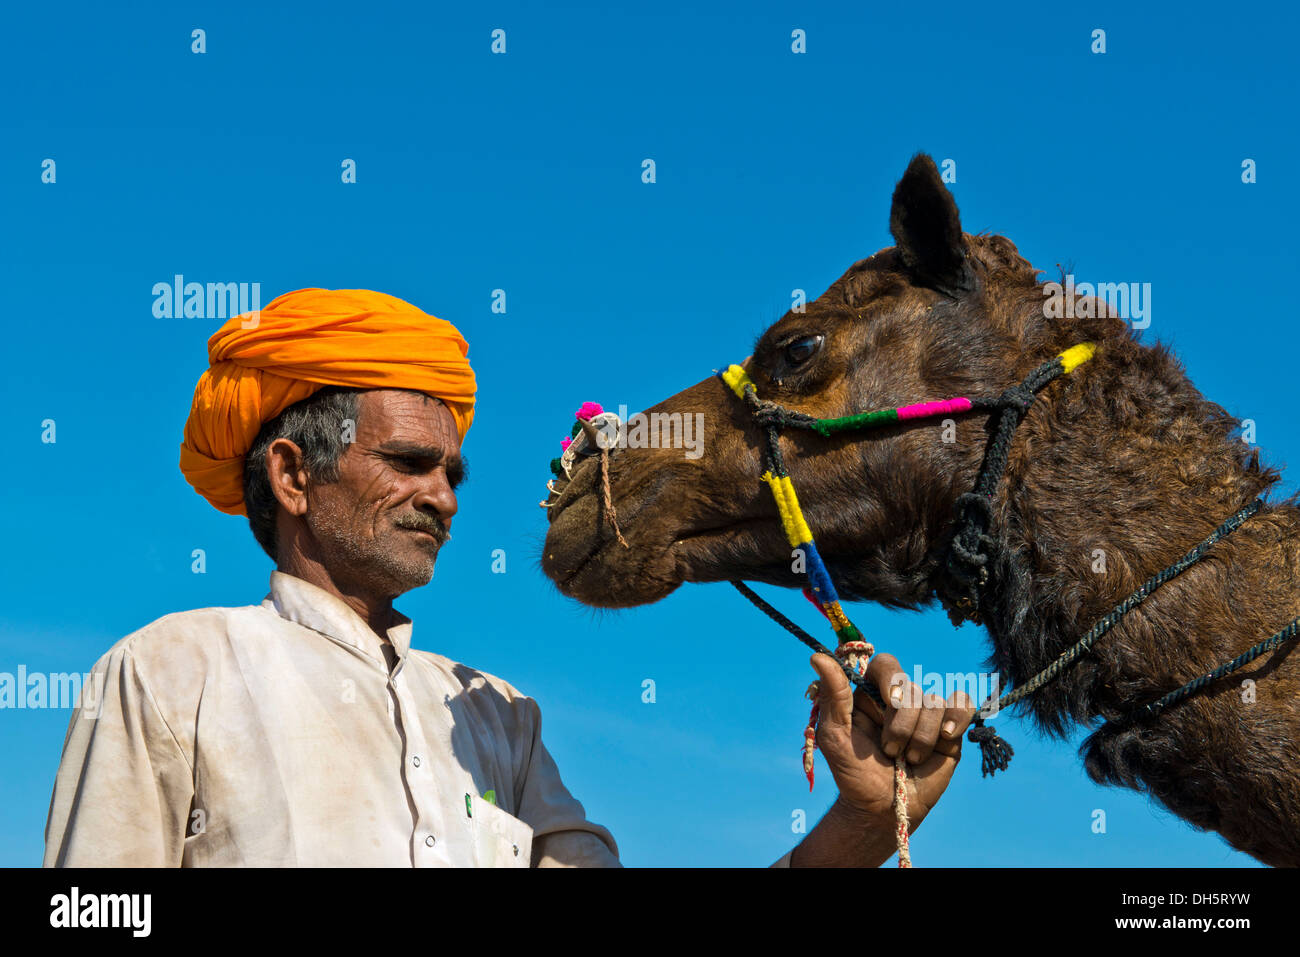 Indian man with an orange turban holding his camel by the reins, Pushkar Camel Fair, Pushkar, Rajasthan, India Stock Photo